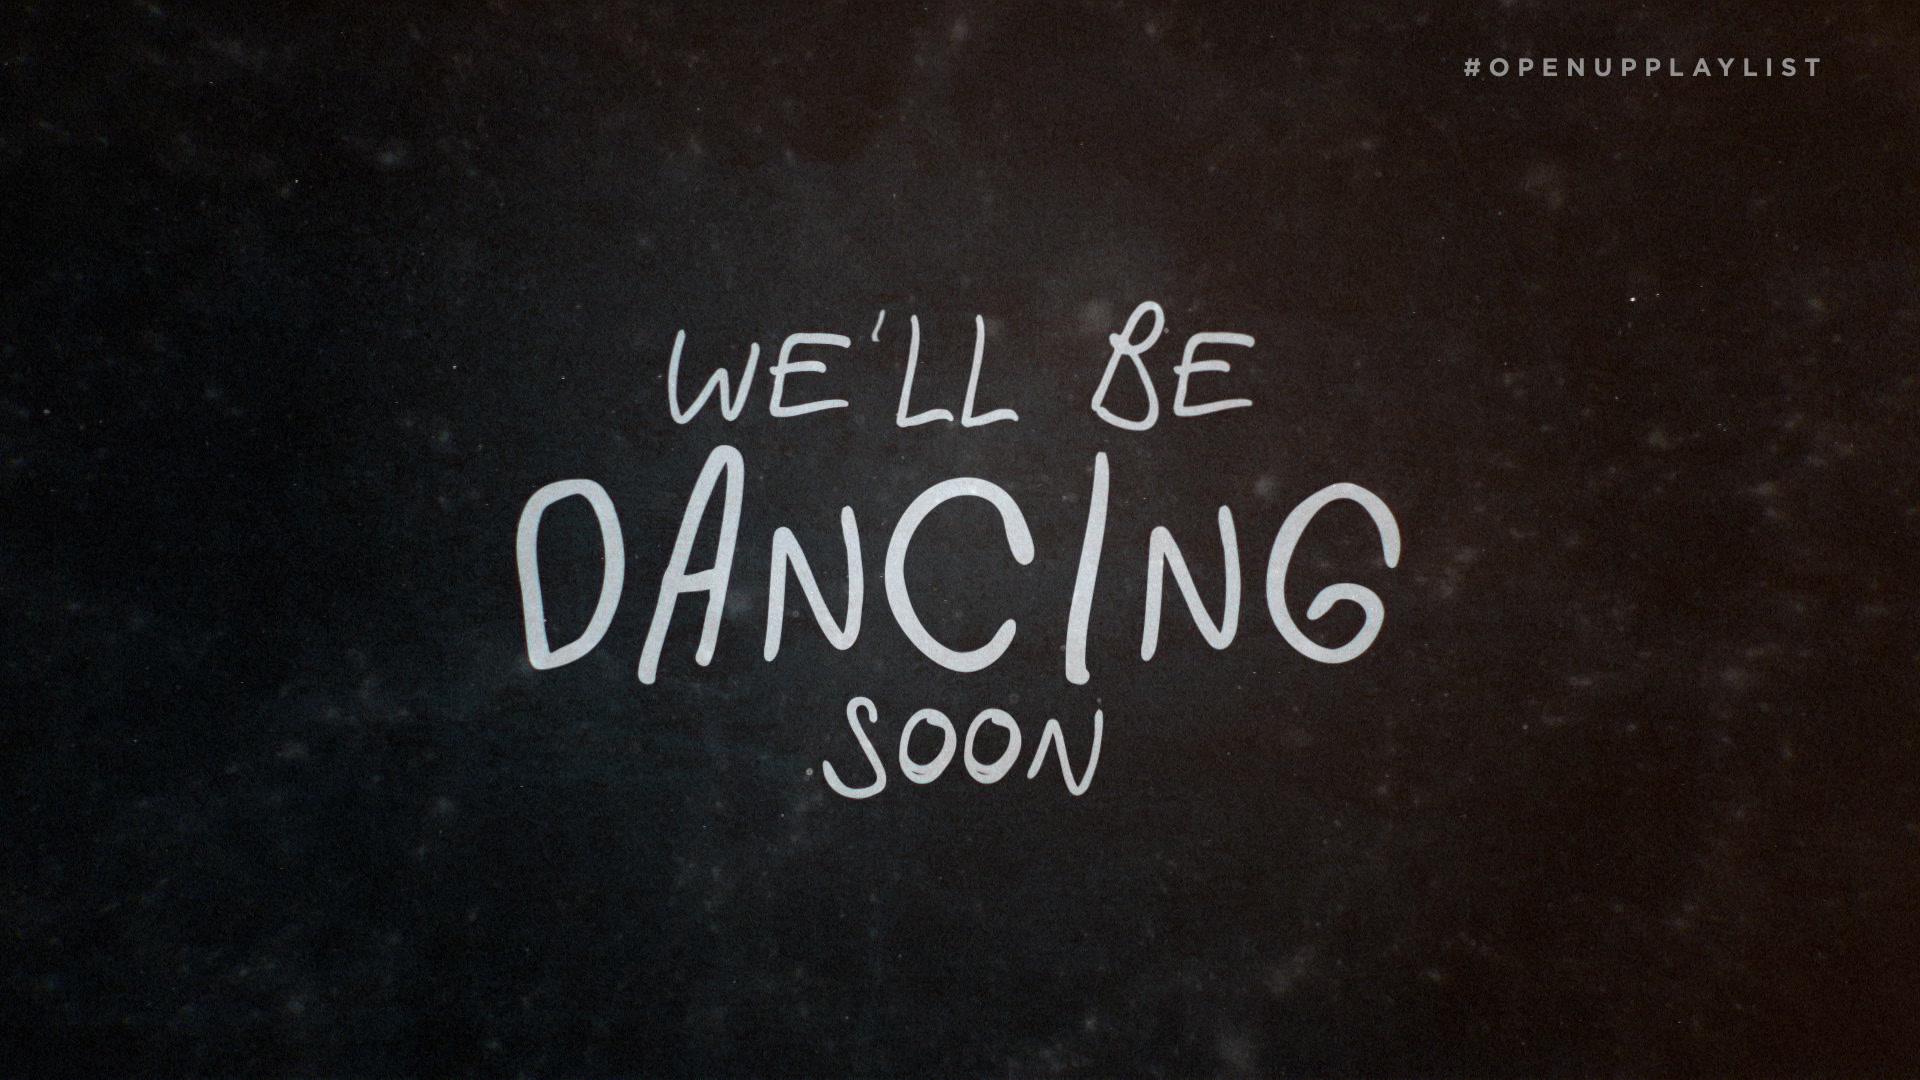 Dimitri Vegas & Like Mike - We'll Be Dancing Soon